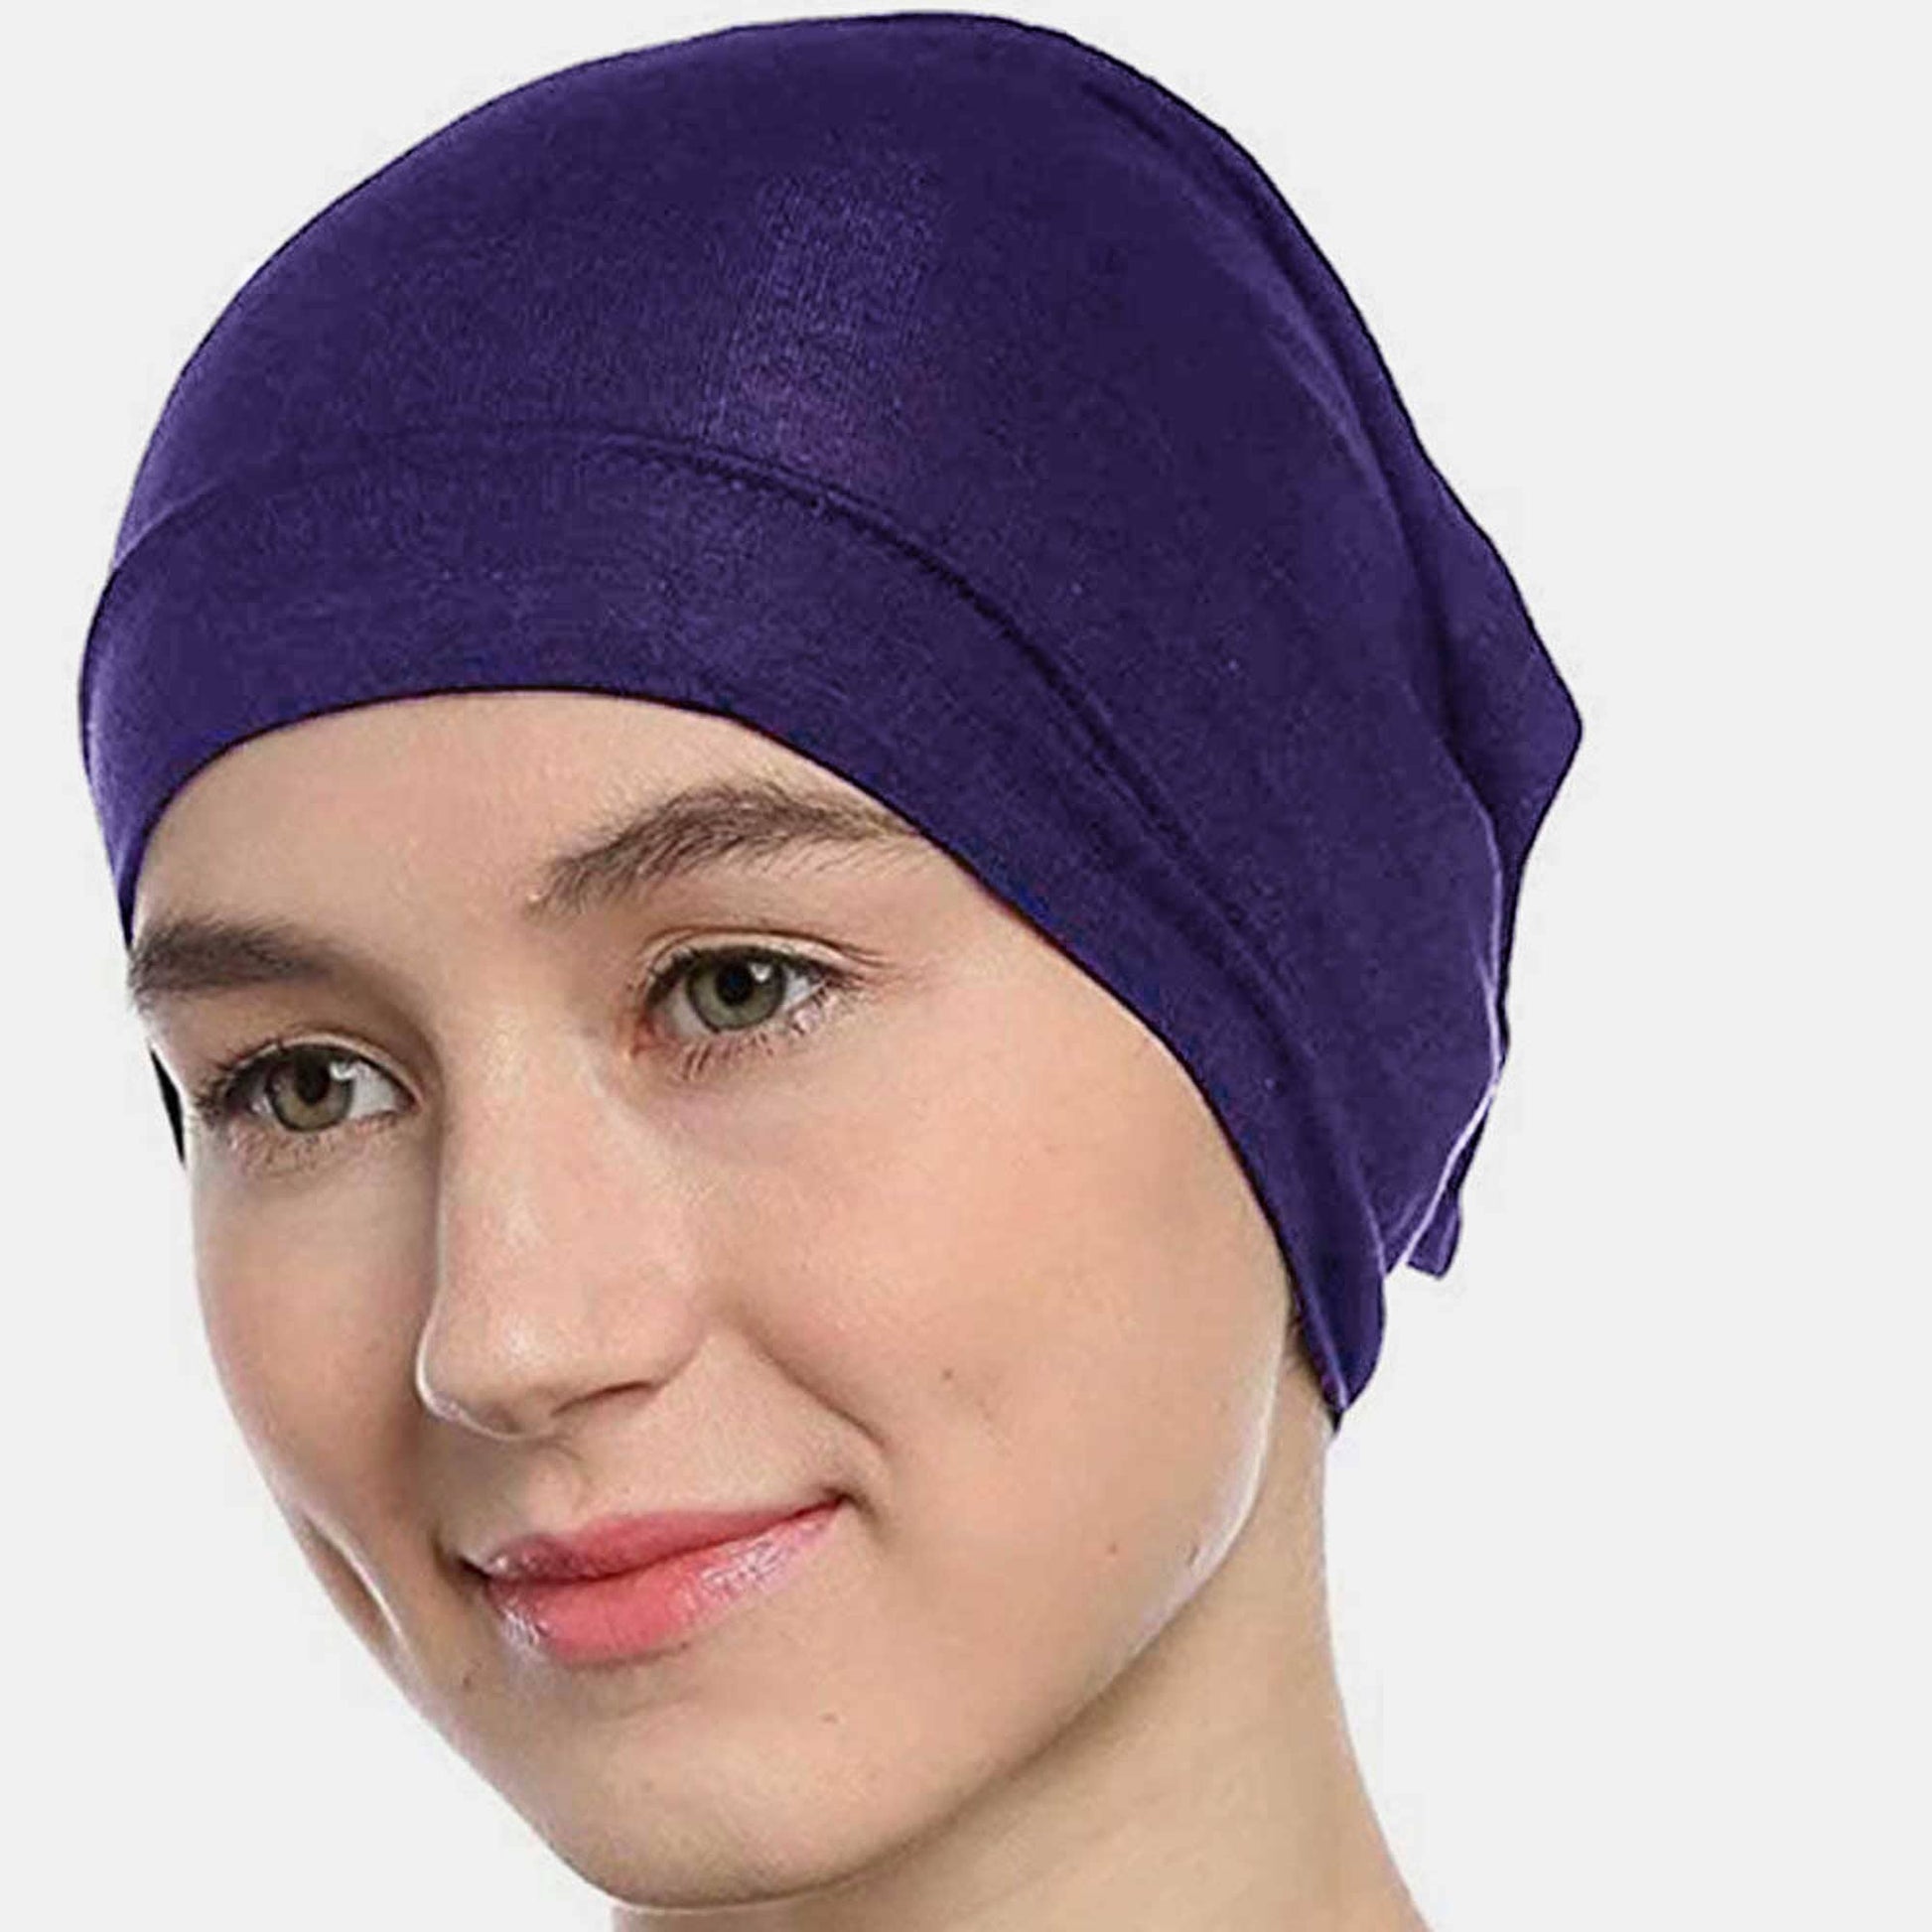 Women's Under Scarf Hijab Cap Women's Accessories De Artistic Purple 